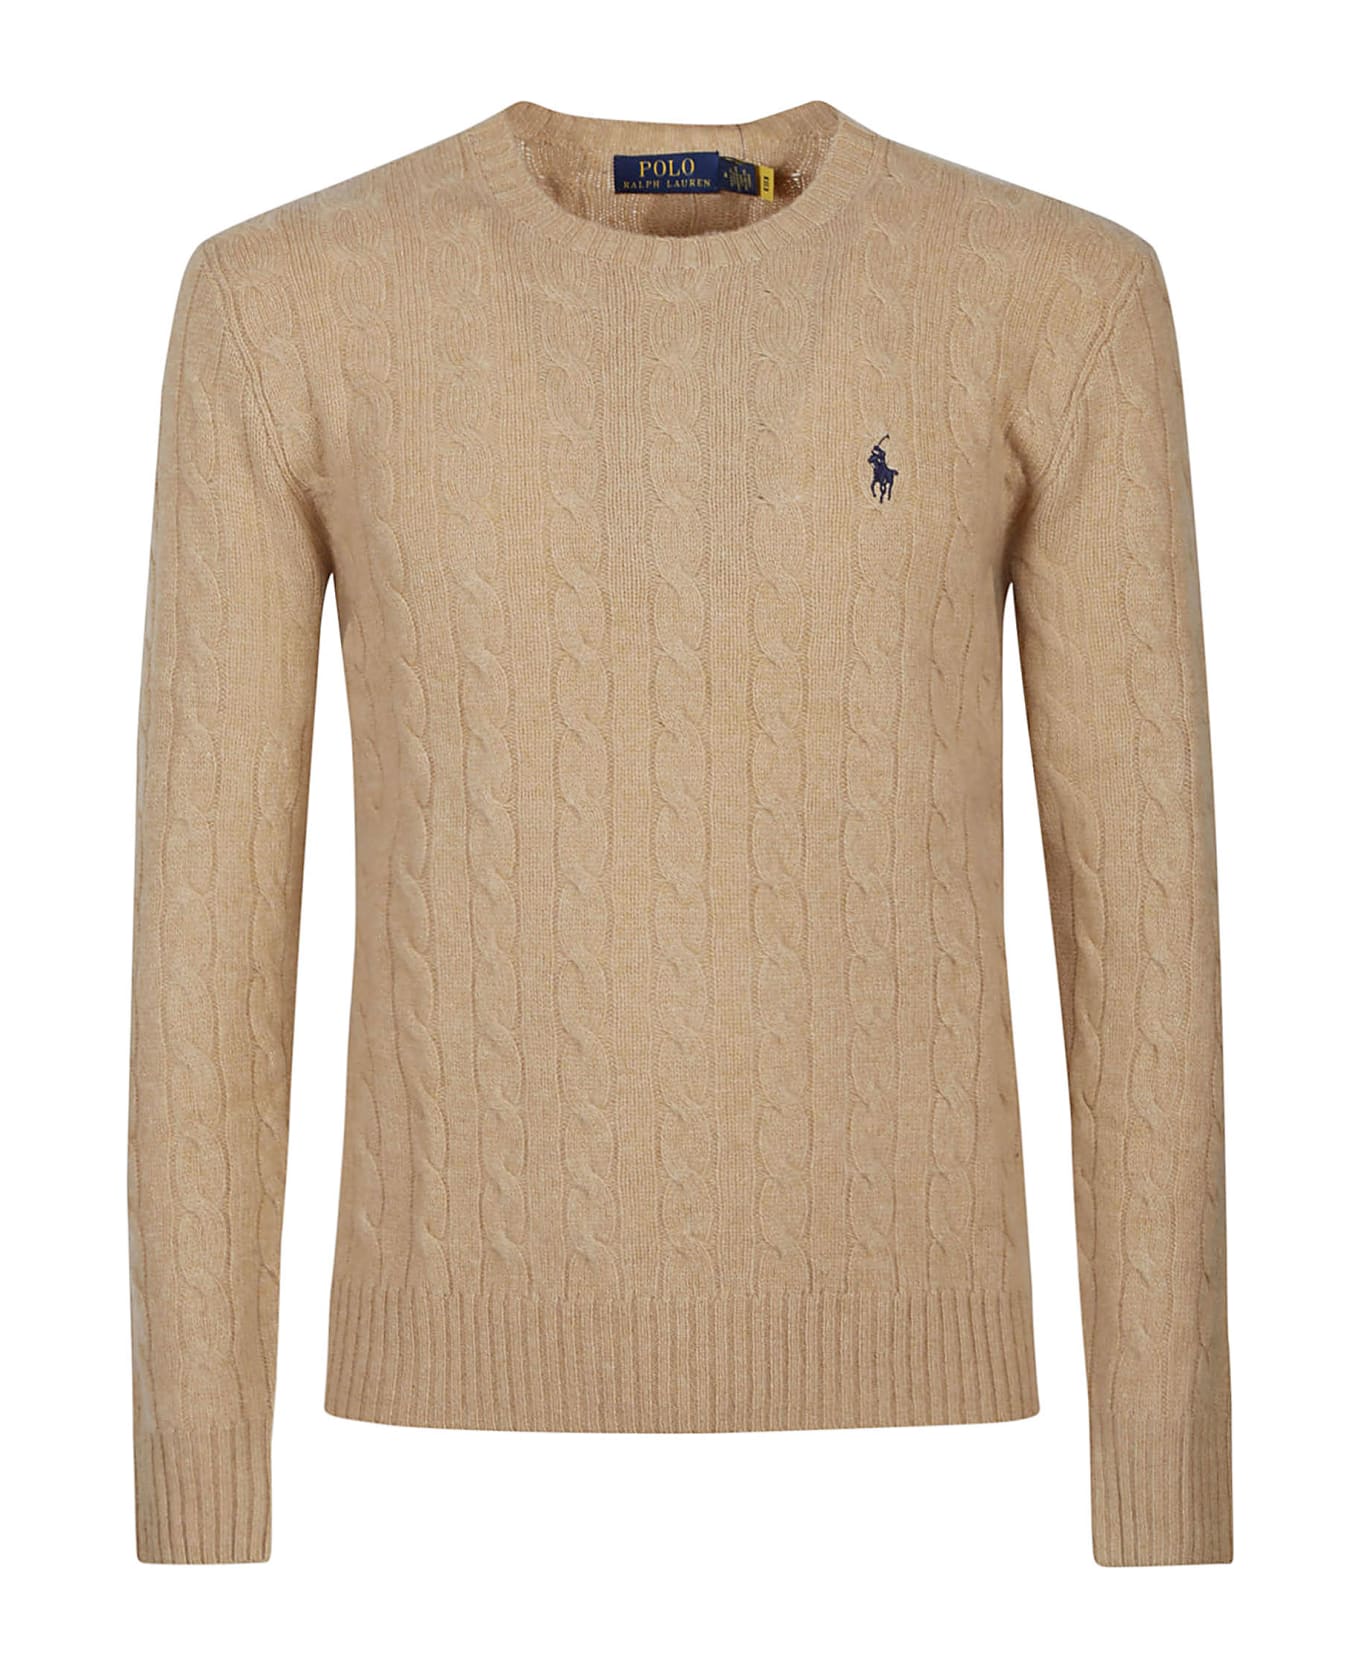 Ralph Lauren Long Sleeve Sweater - Camel Melange